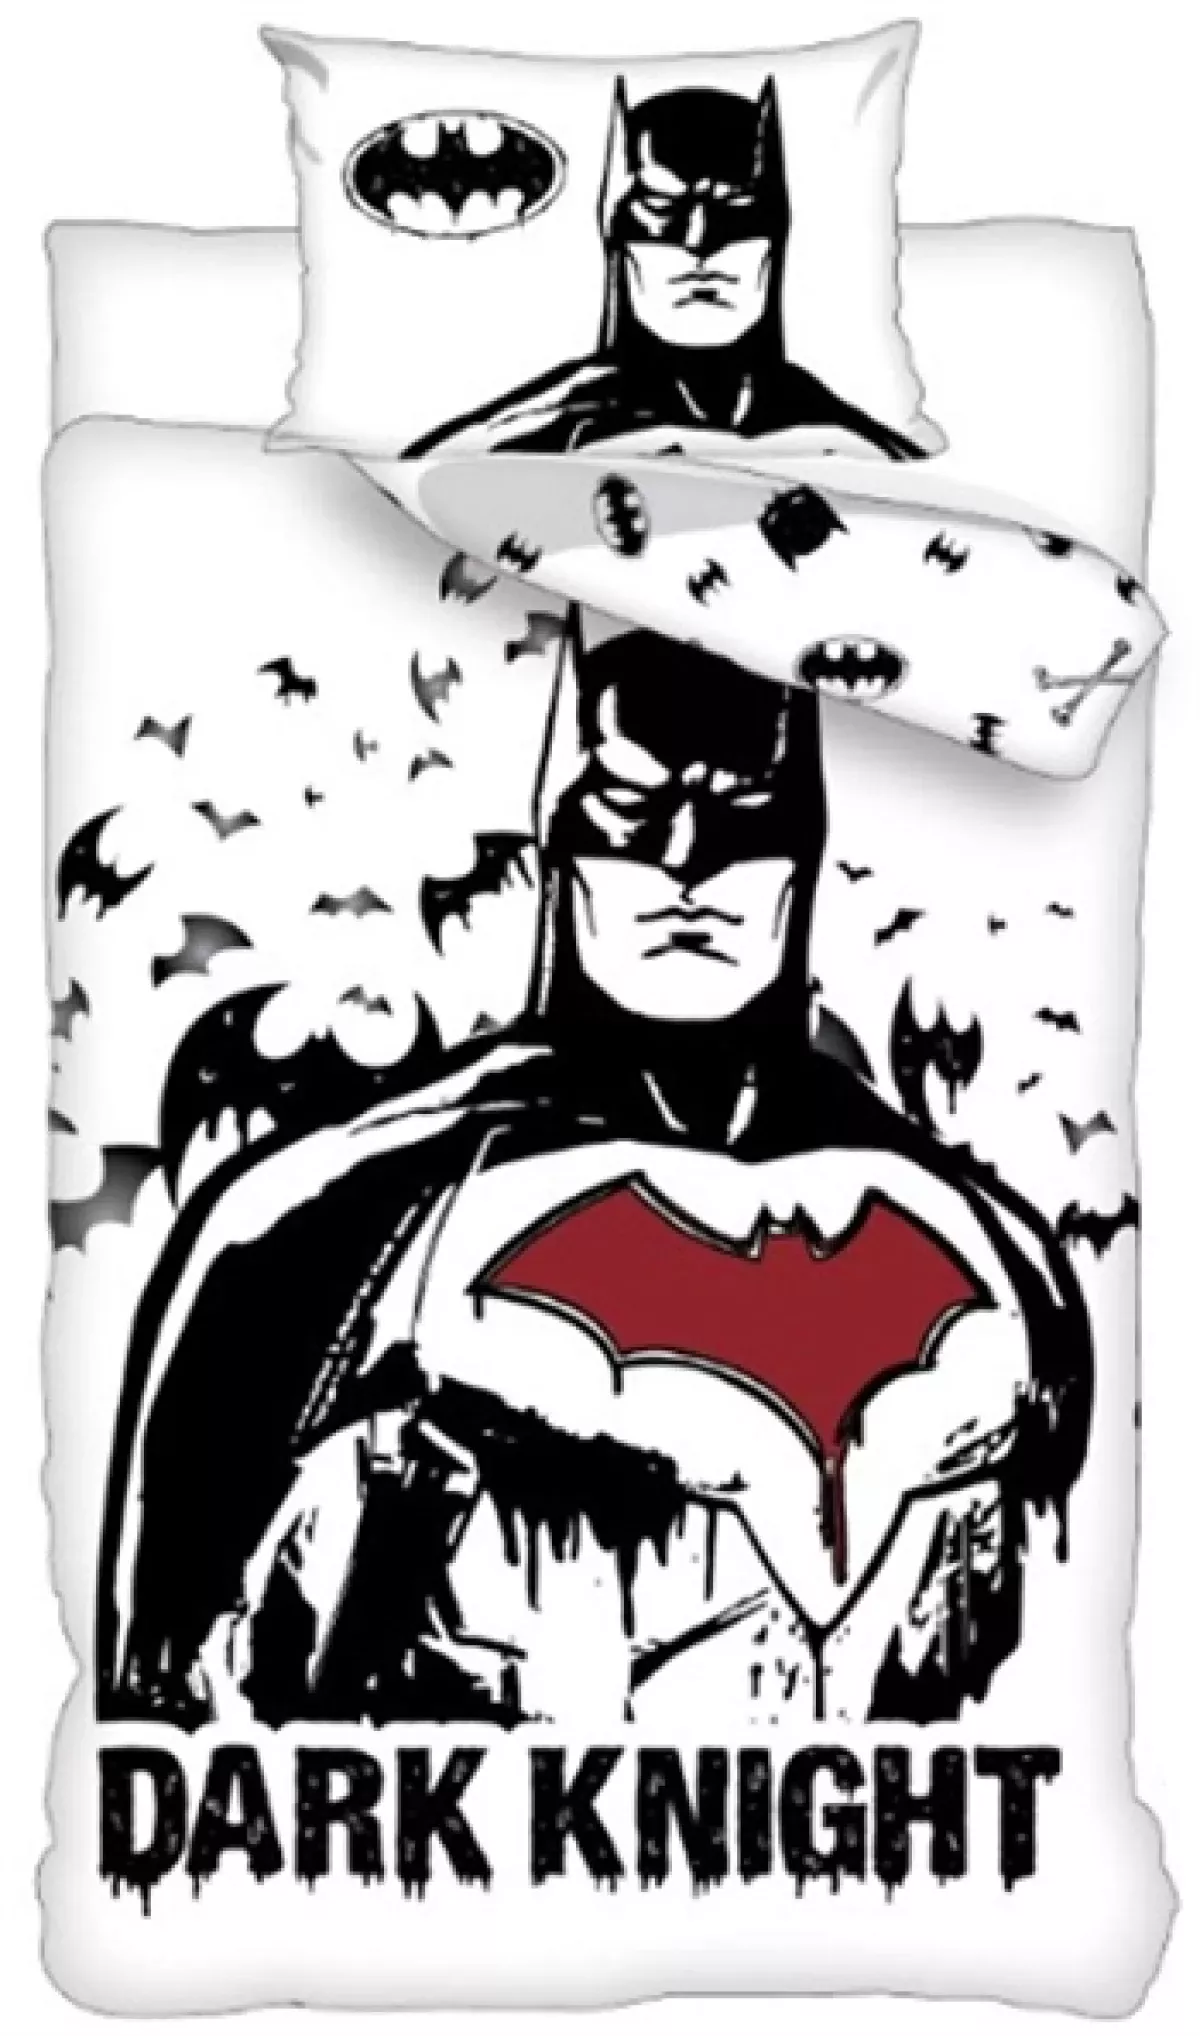 #1 - Batman sengetøj - 140x200 cm - Dark knight sengesæt - 2 i 1 design - Sengelinned i 100% bomuld